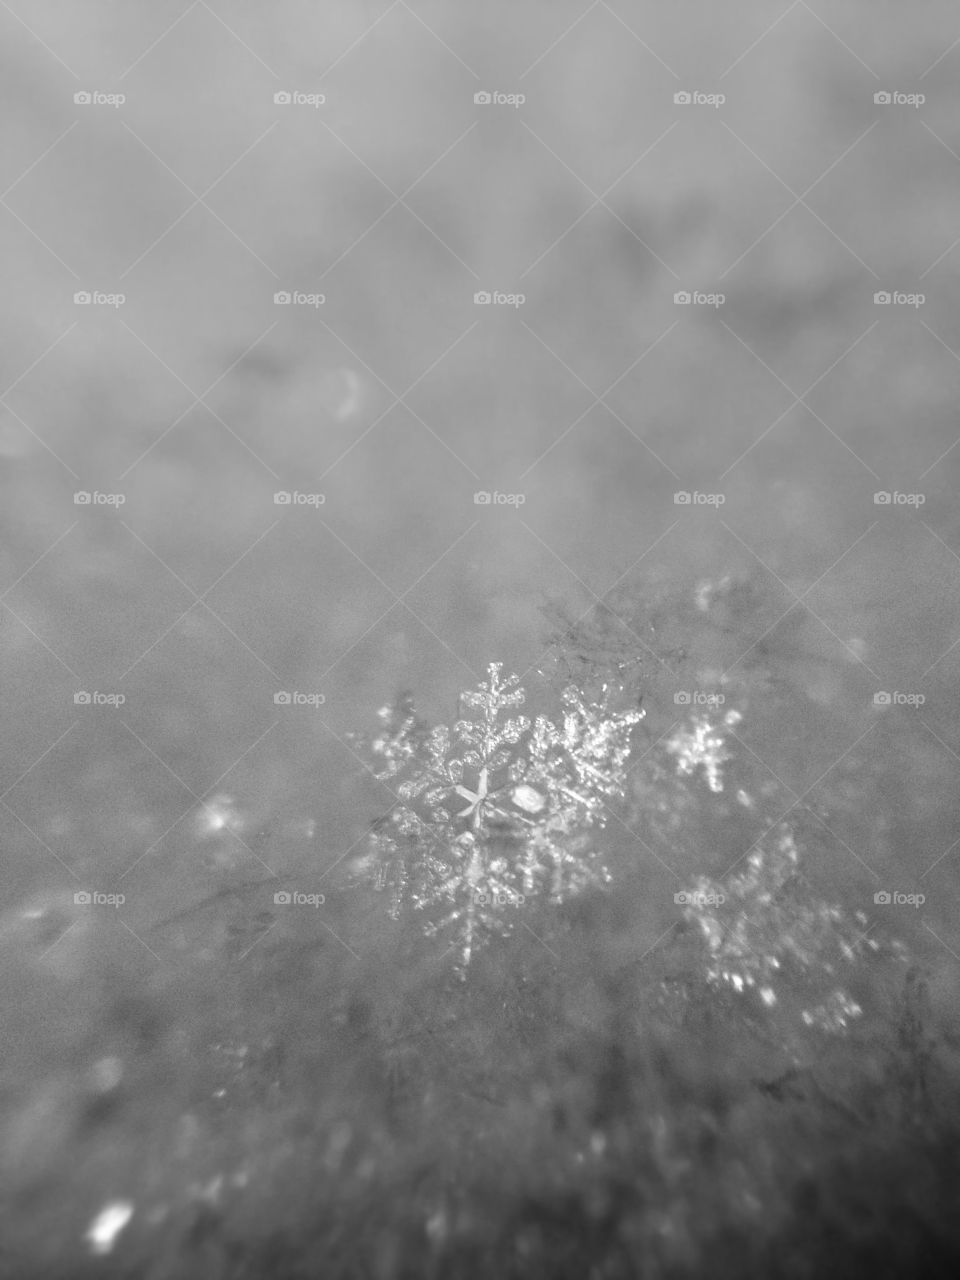 Snowflake taken by iphone macro lens